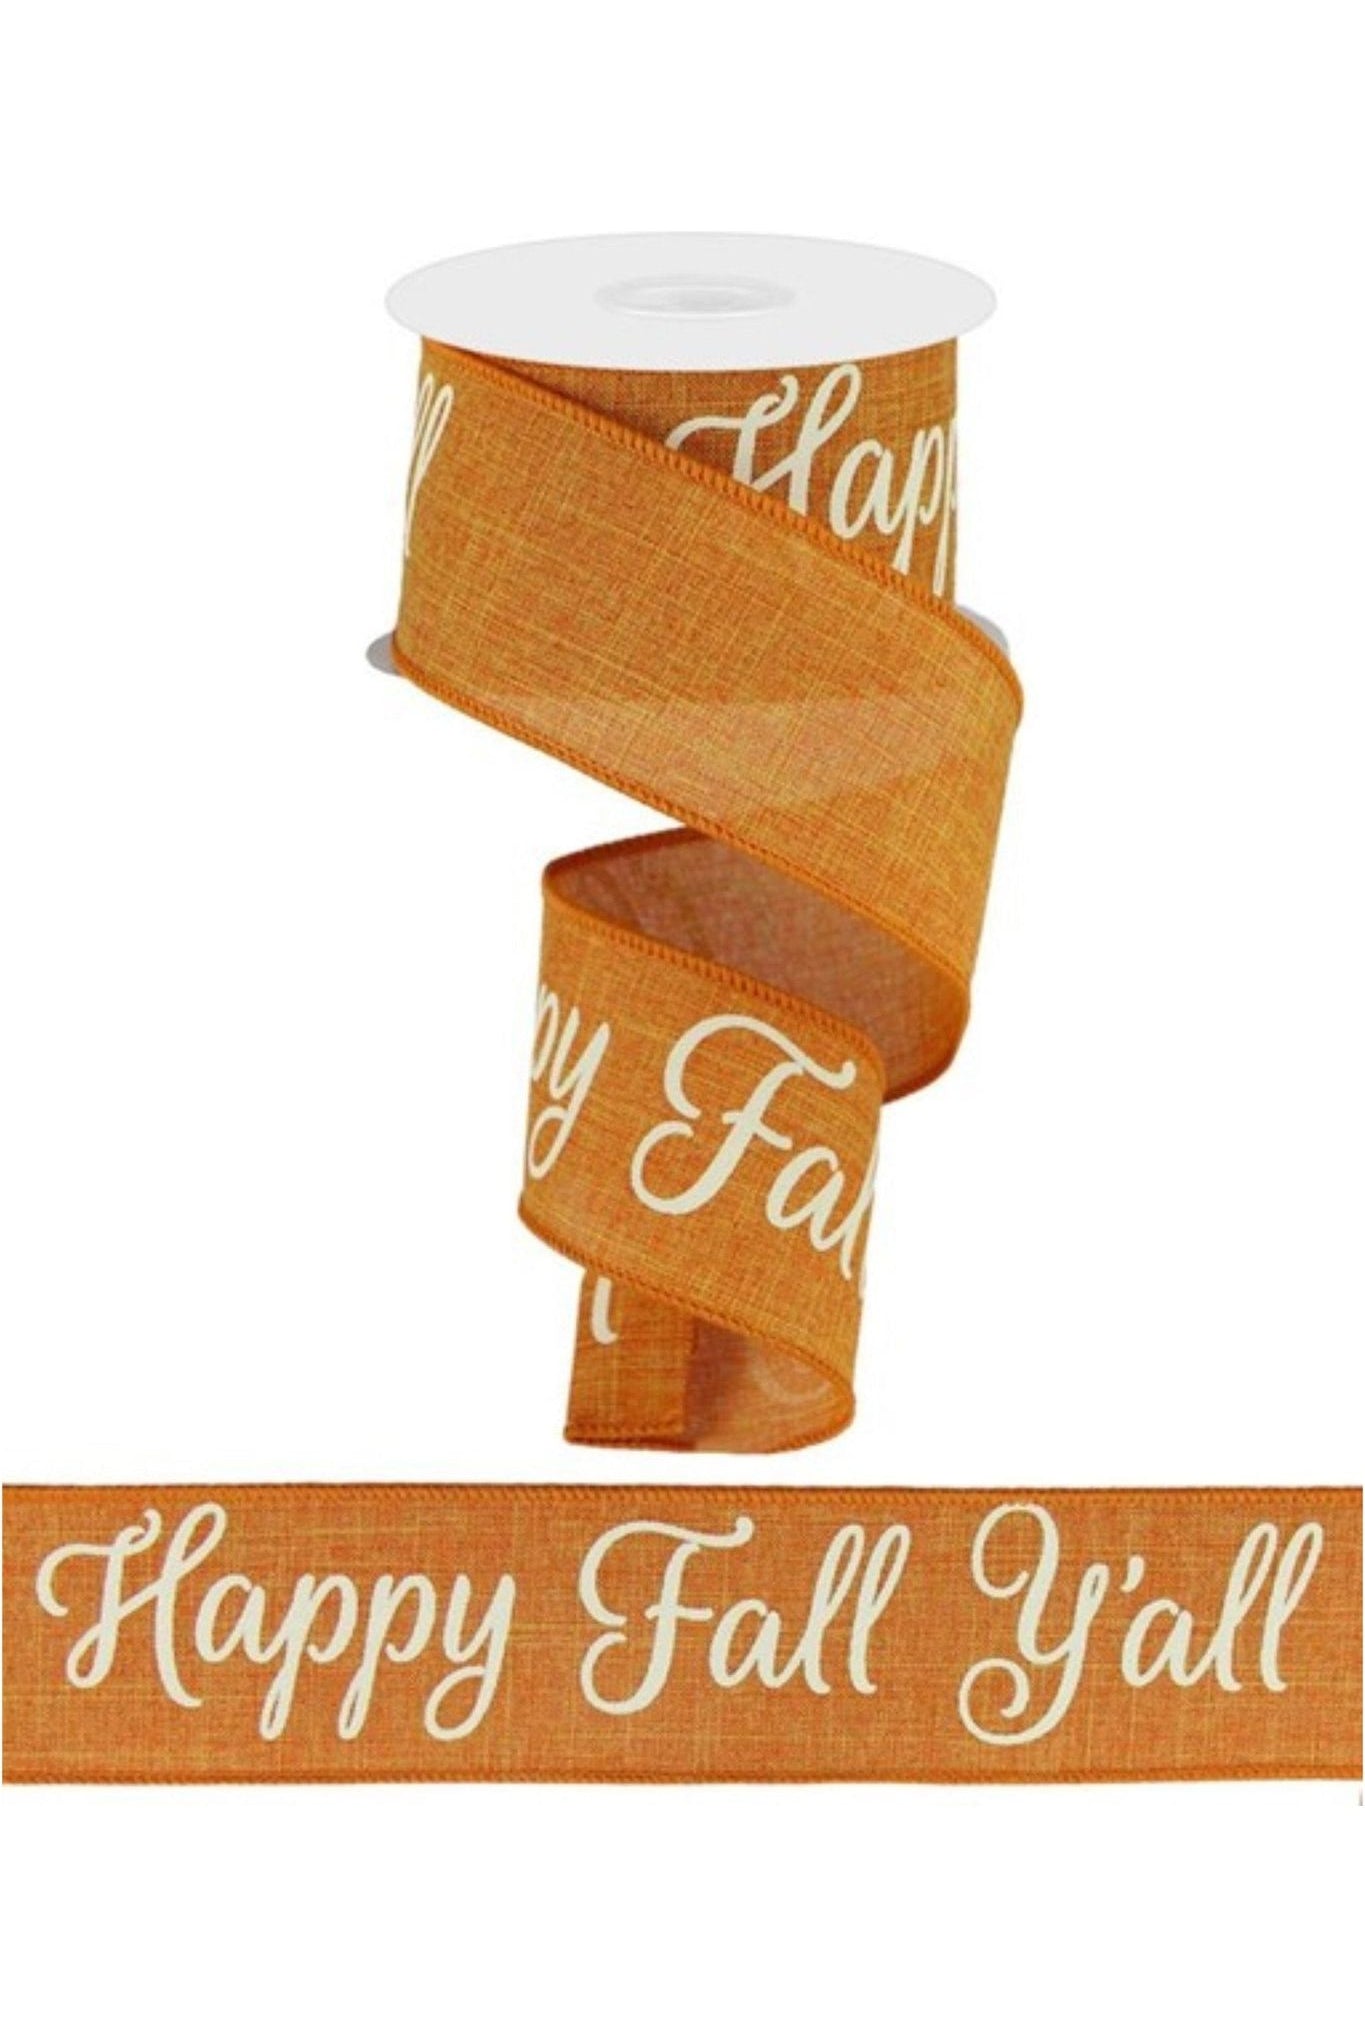 Shop For 2.5" Happy Fall Yall Ribbon: Talisman (10 Yards) RGA14685T